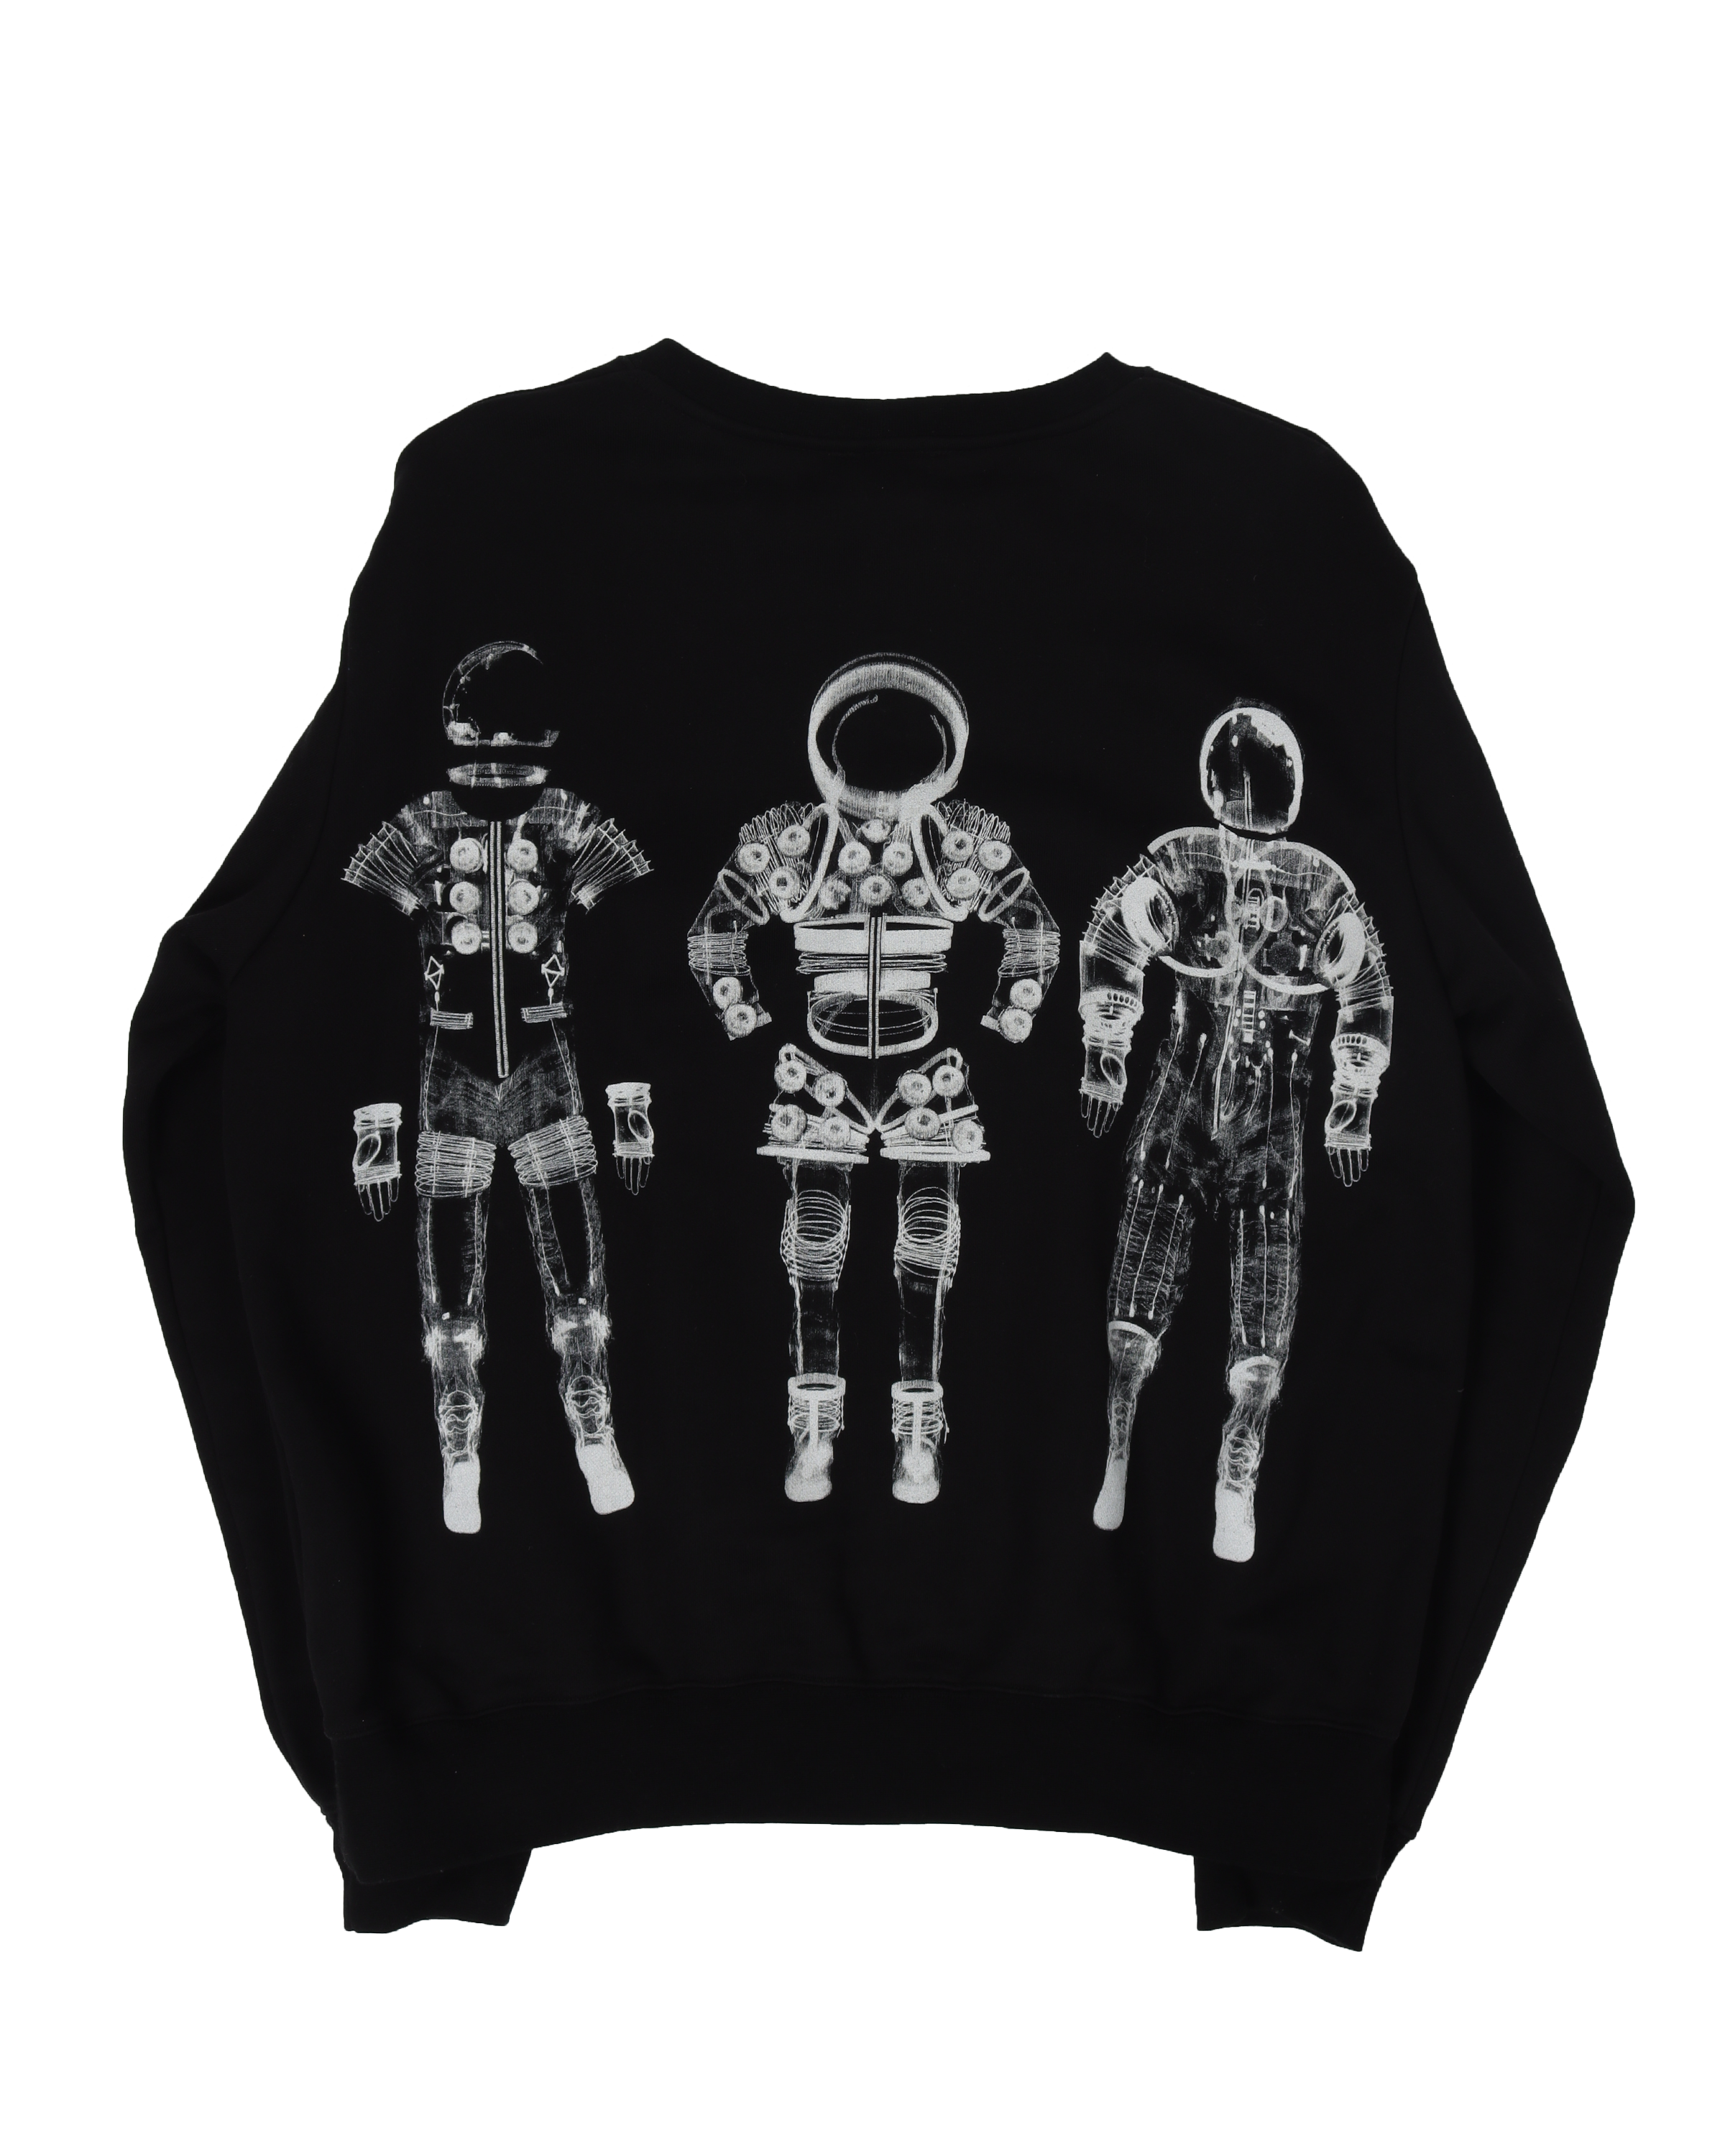 Astronaut Crewneck Sweatshirt (Fall 2017)